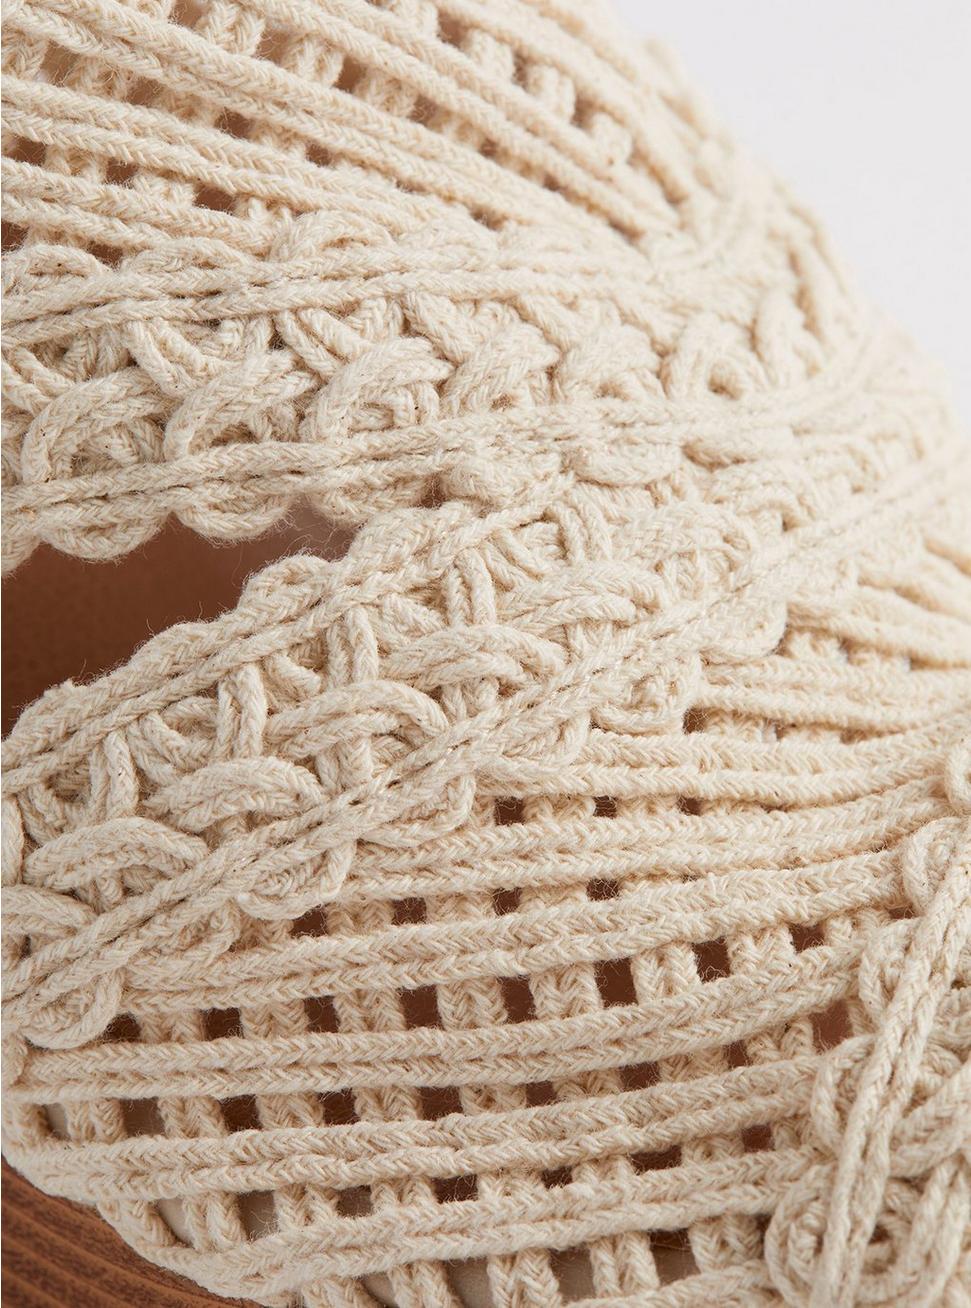 Plus Size Crochet Cage Platform Wedge (WW), NATURAL, alternate